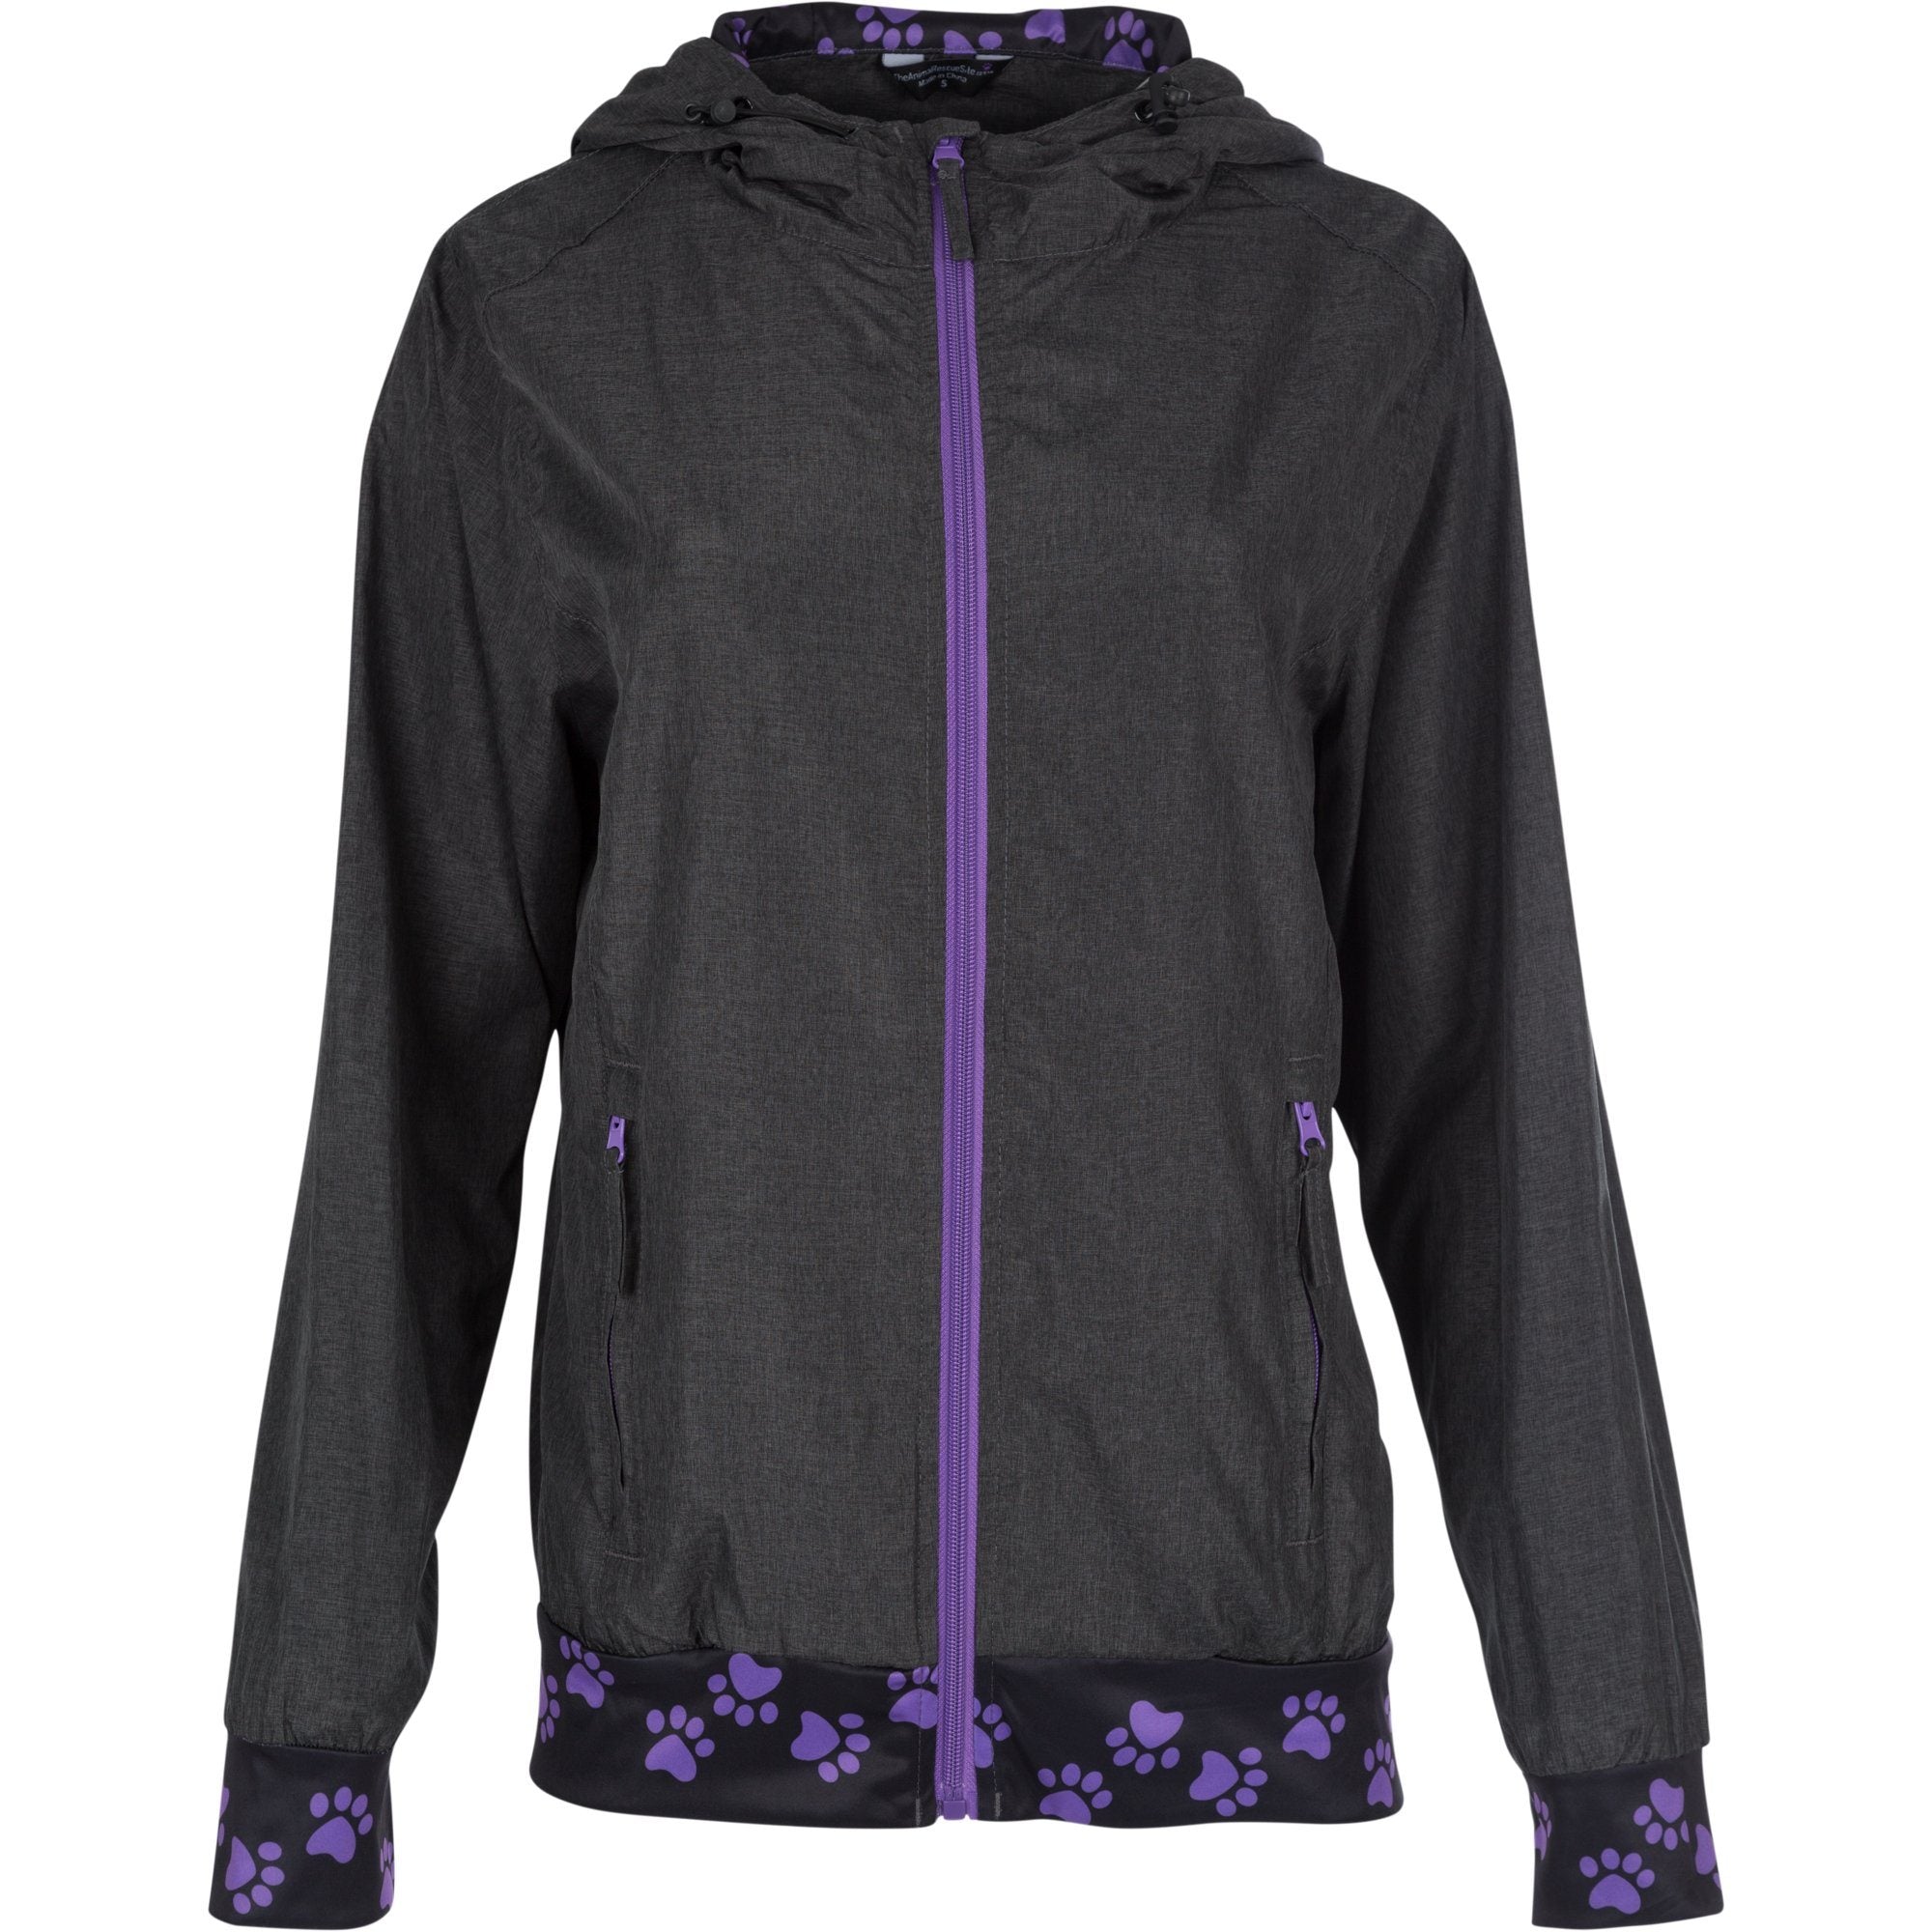 Purple Paw Lightweight Athletic Jacket - L